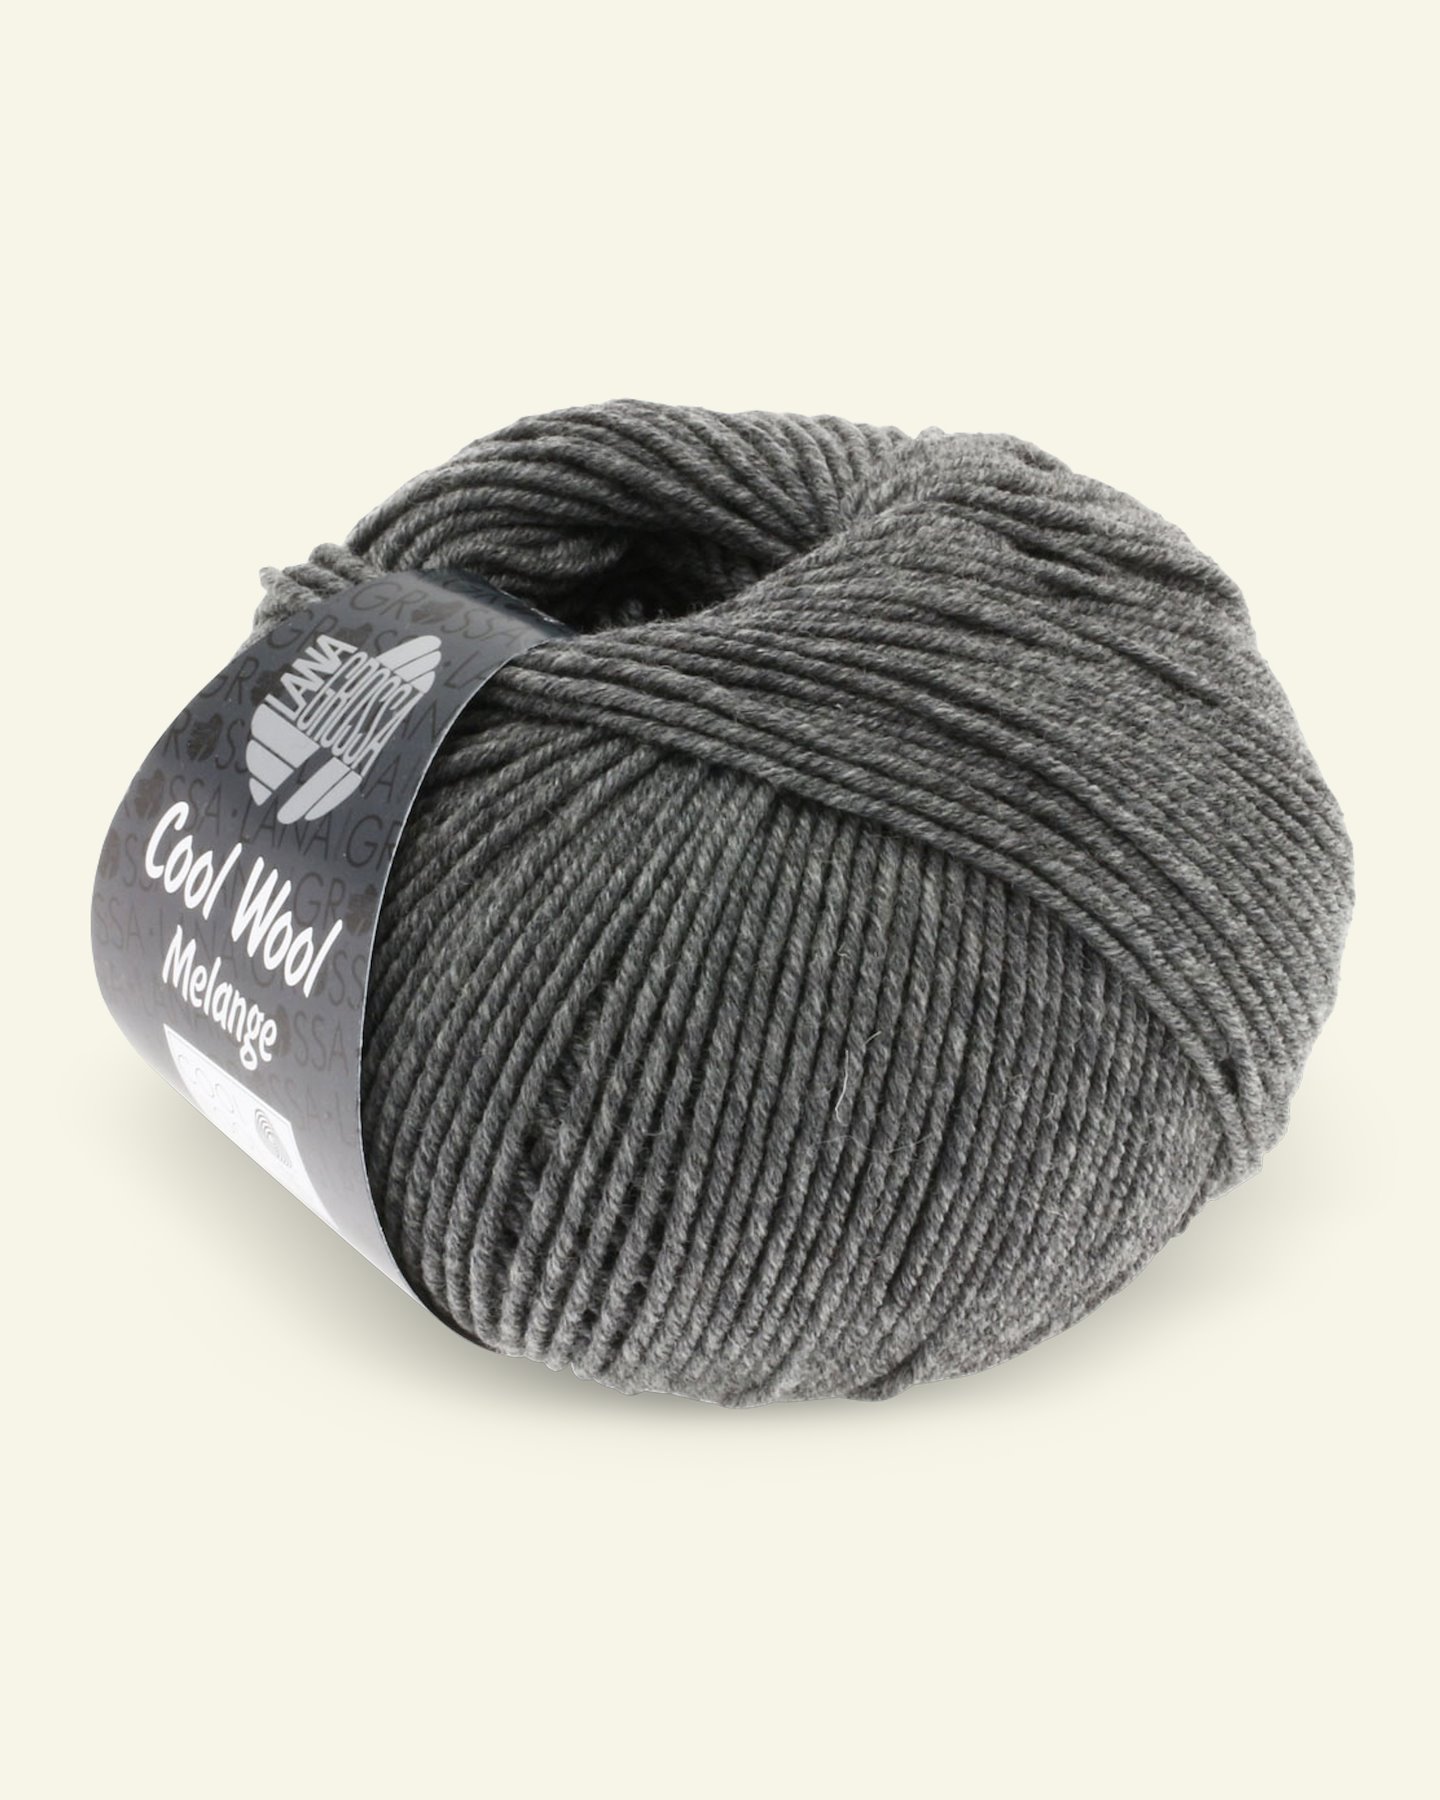 Lana Grossa, extrafine merino wool yarn "Cool Wool", grey mel. 90001112_pack